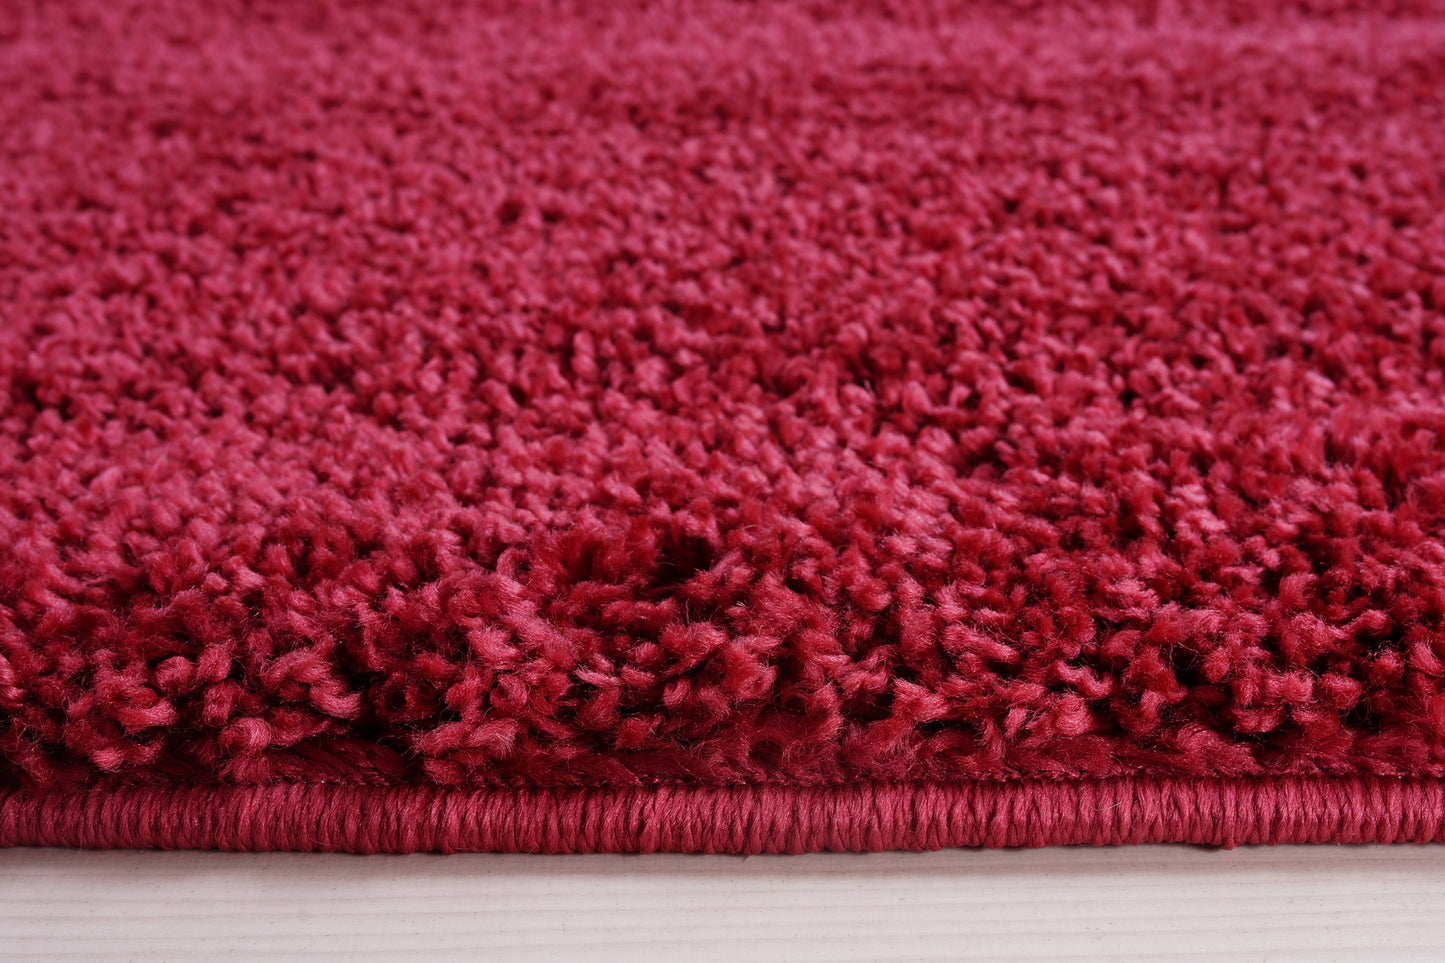 ladole rugs solid rose red shaggy meknes durable medium pile indoor area rug carpet 8x11 710 x 105 240cm x 320cm 8x10, 8x11 ft Large Living Room Carpet, Bedroom, Kitchen